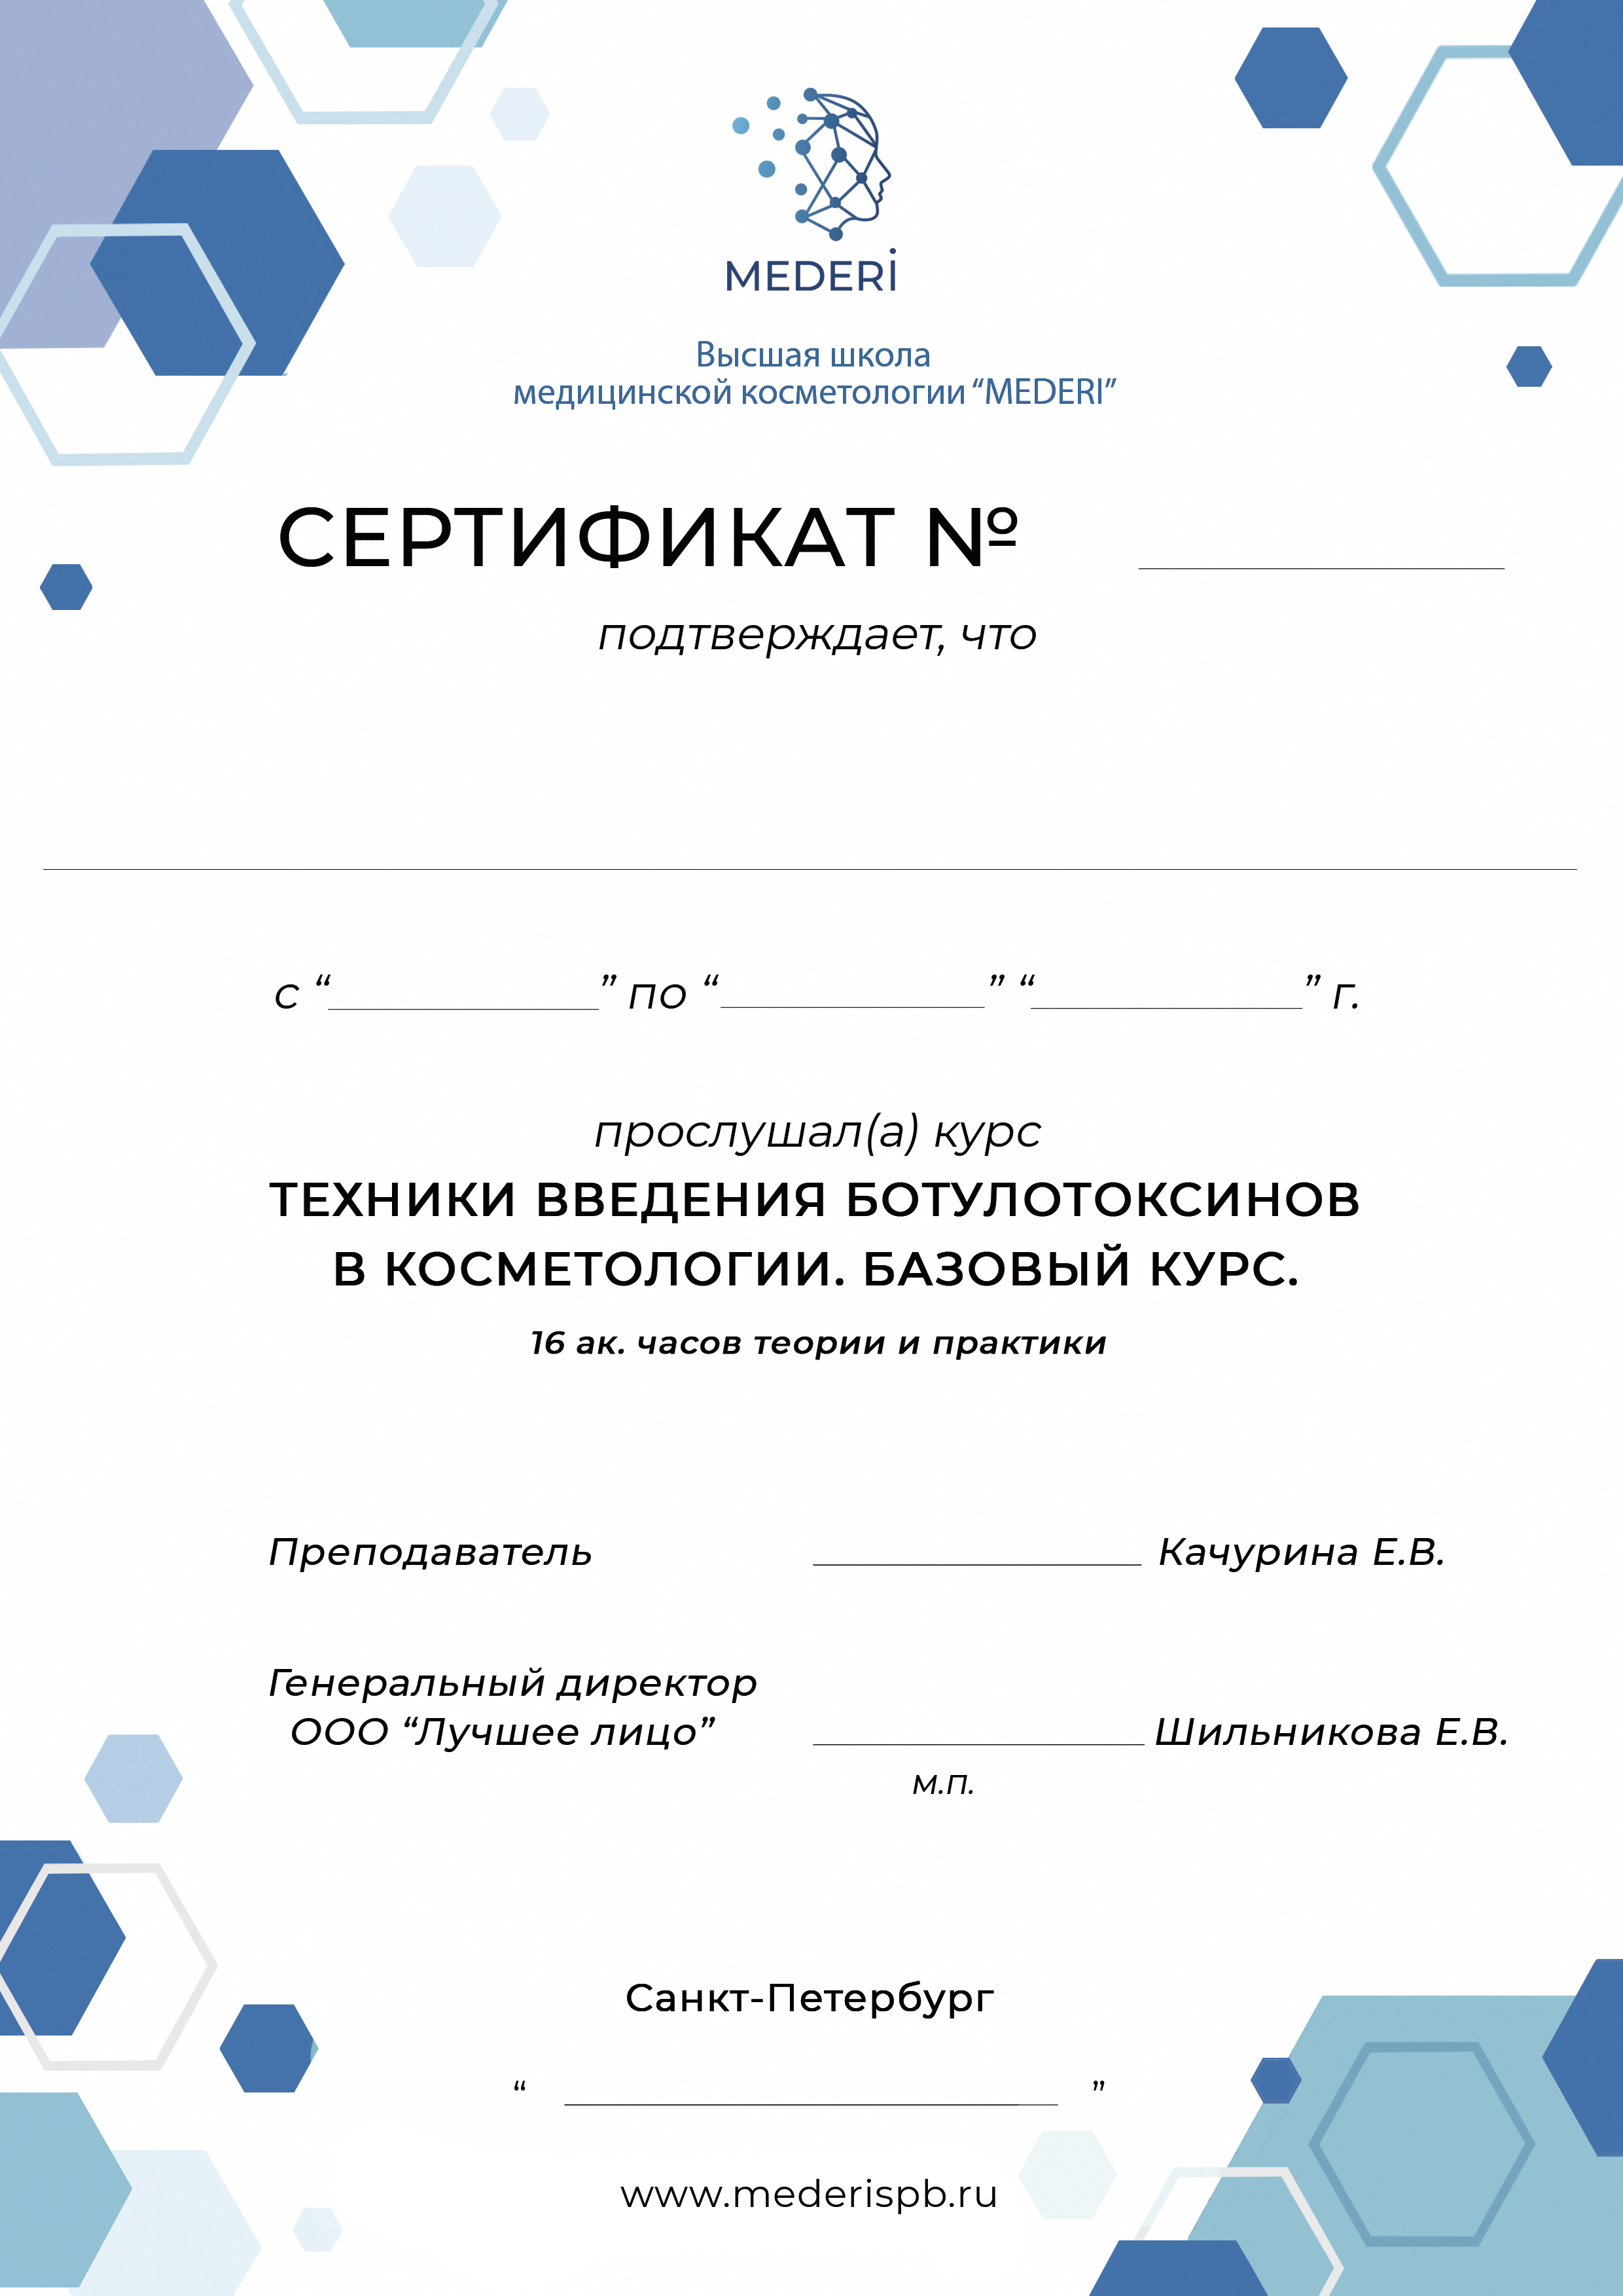 Сертификат по базовому курсу ботулотоксинов